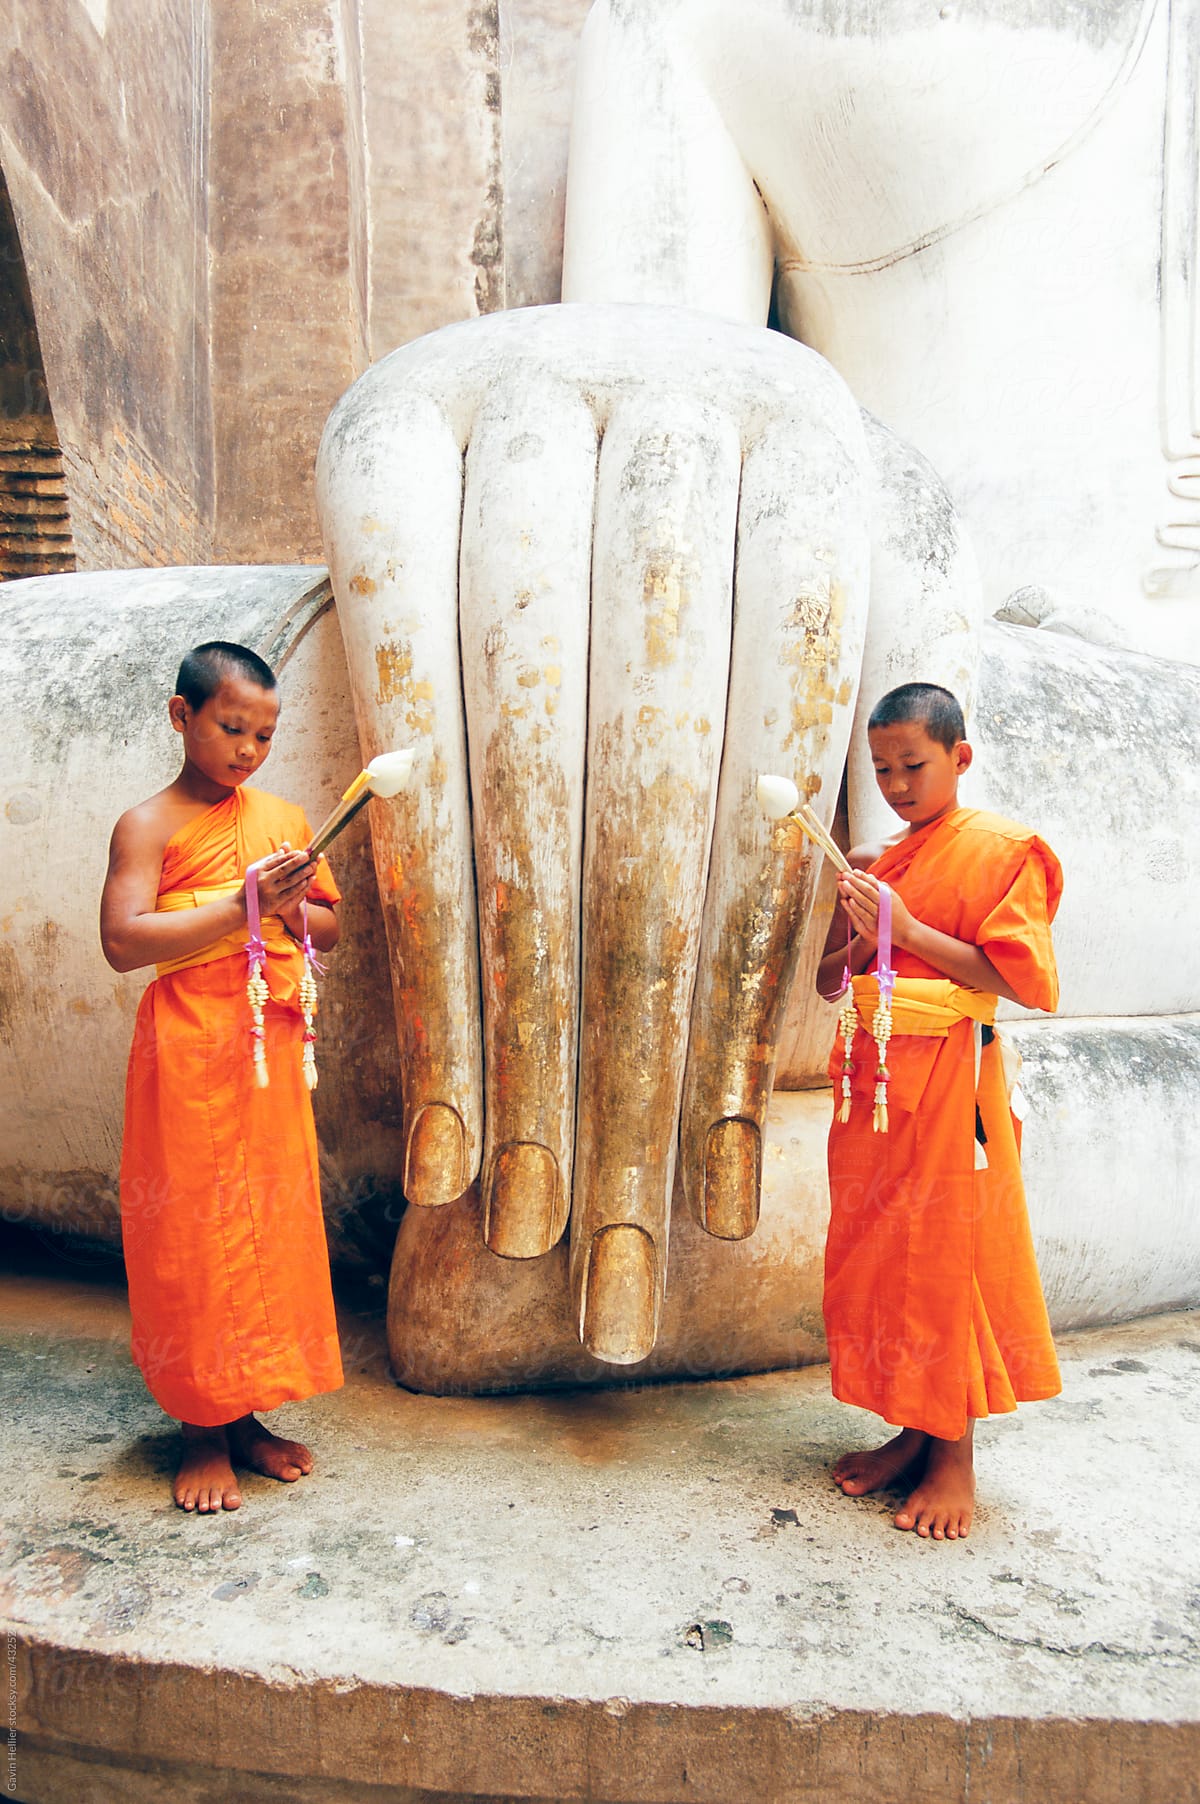 Novice monks and Phra Atchana Buddha statue, Wat Si Chum, Sukhothai, UNESCO World Heritage Site, Sukhothai Province, Thailand, Asia